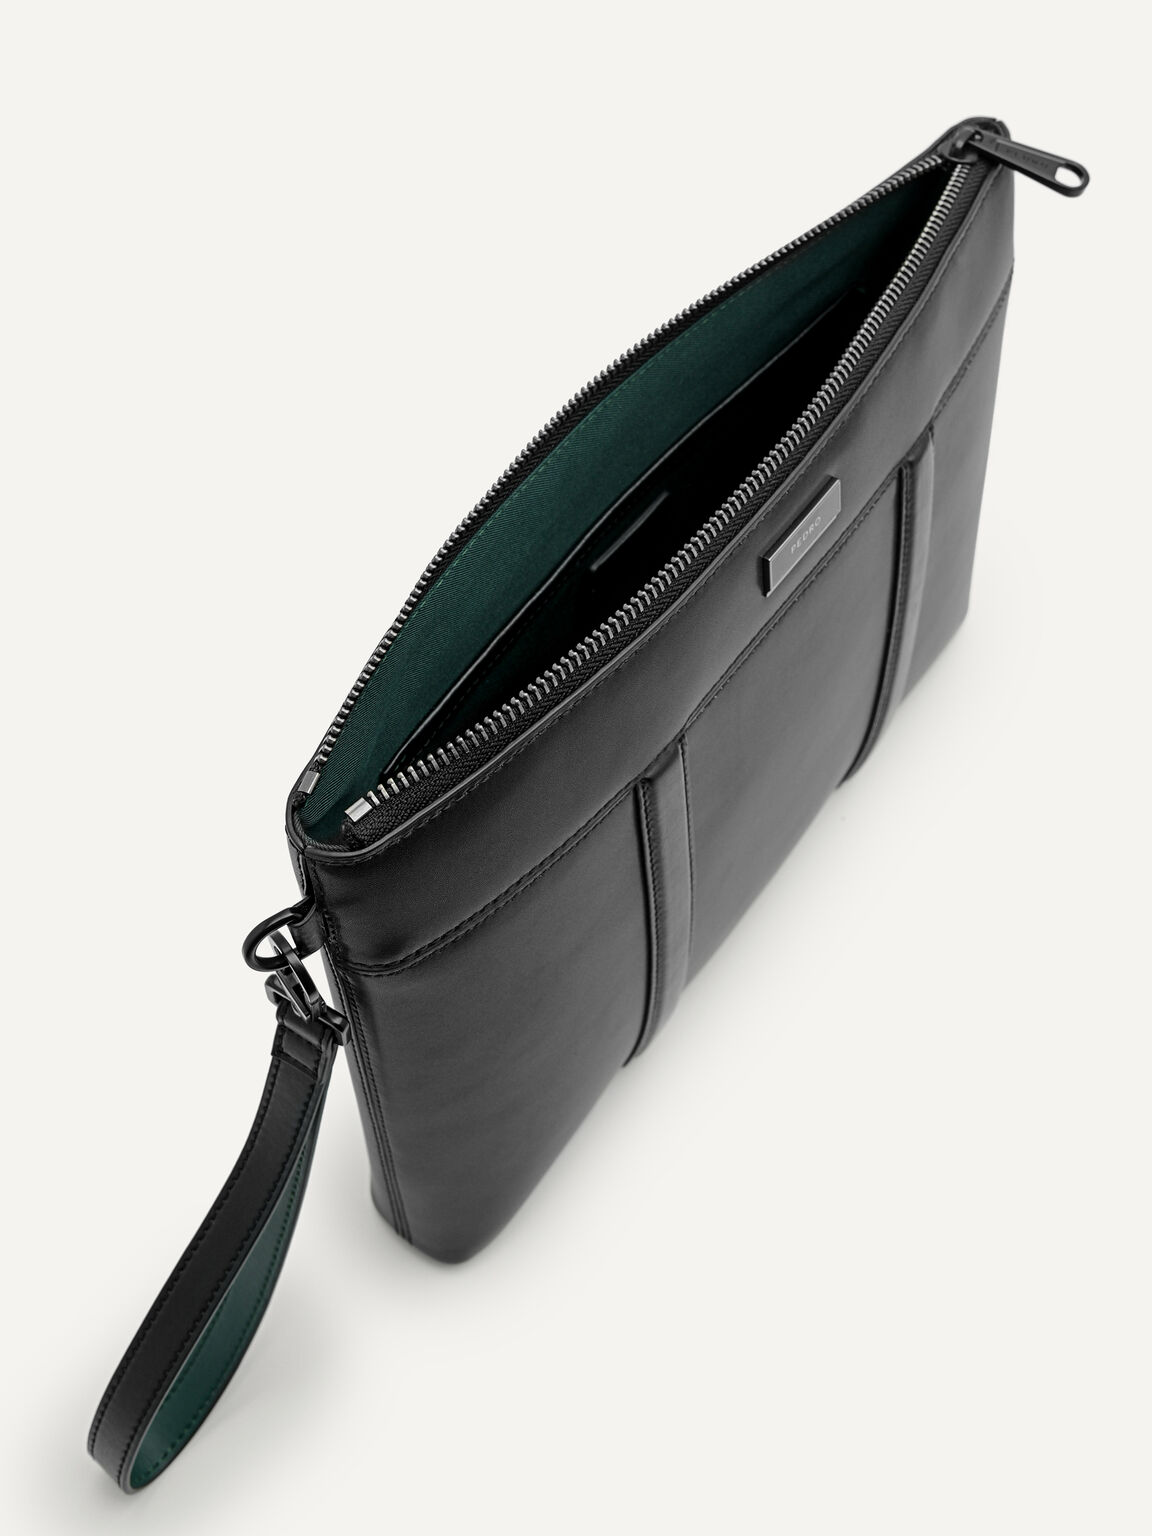 Allen Leather Portfolio Bag, Black